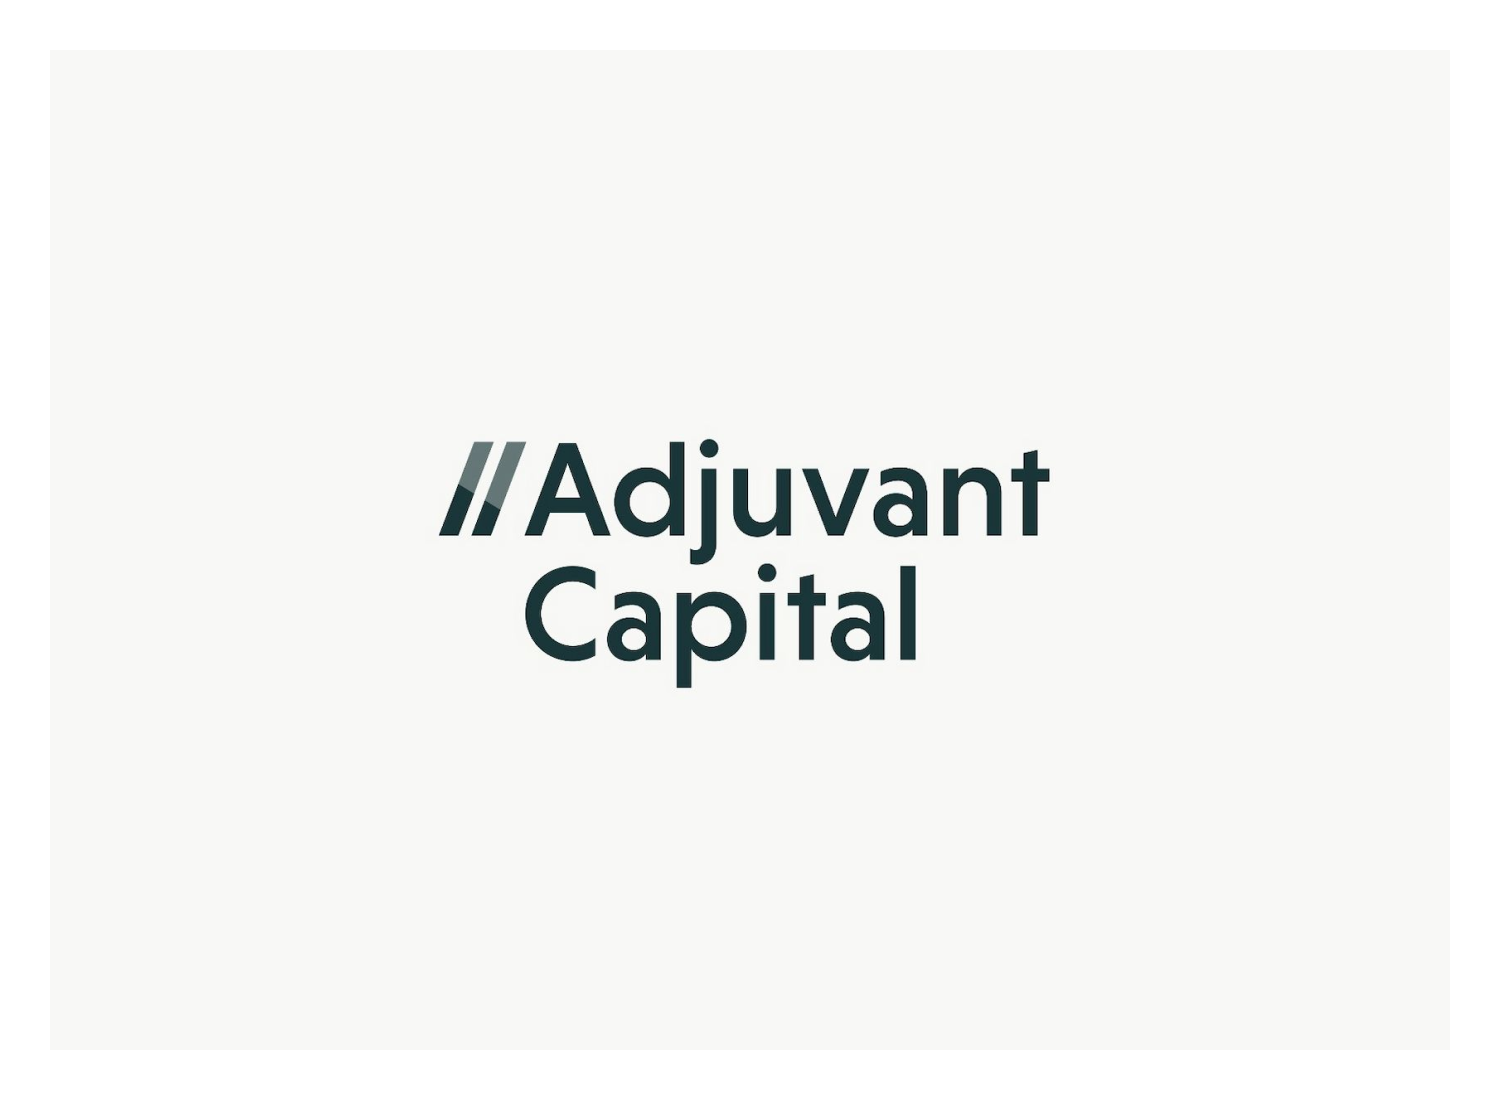 Adjuvant Capital branding screenshot